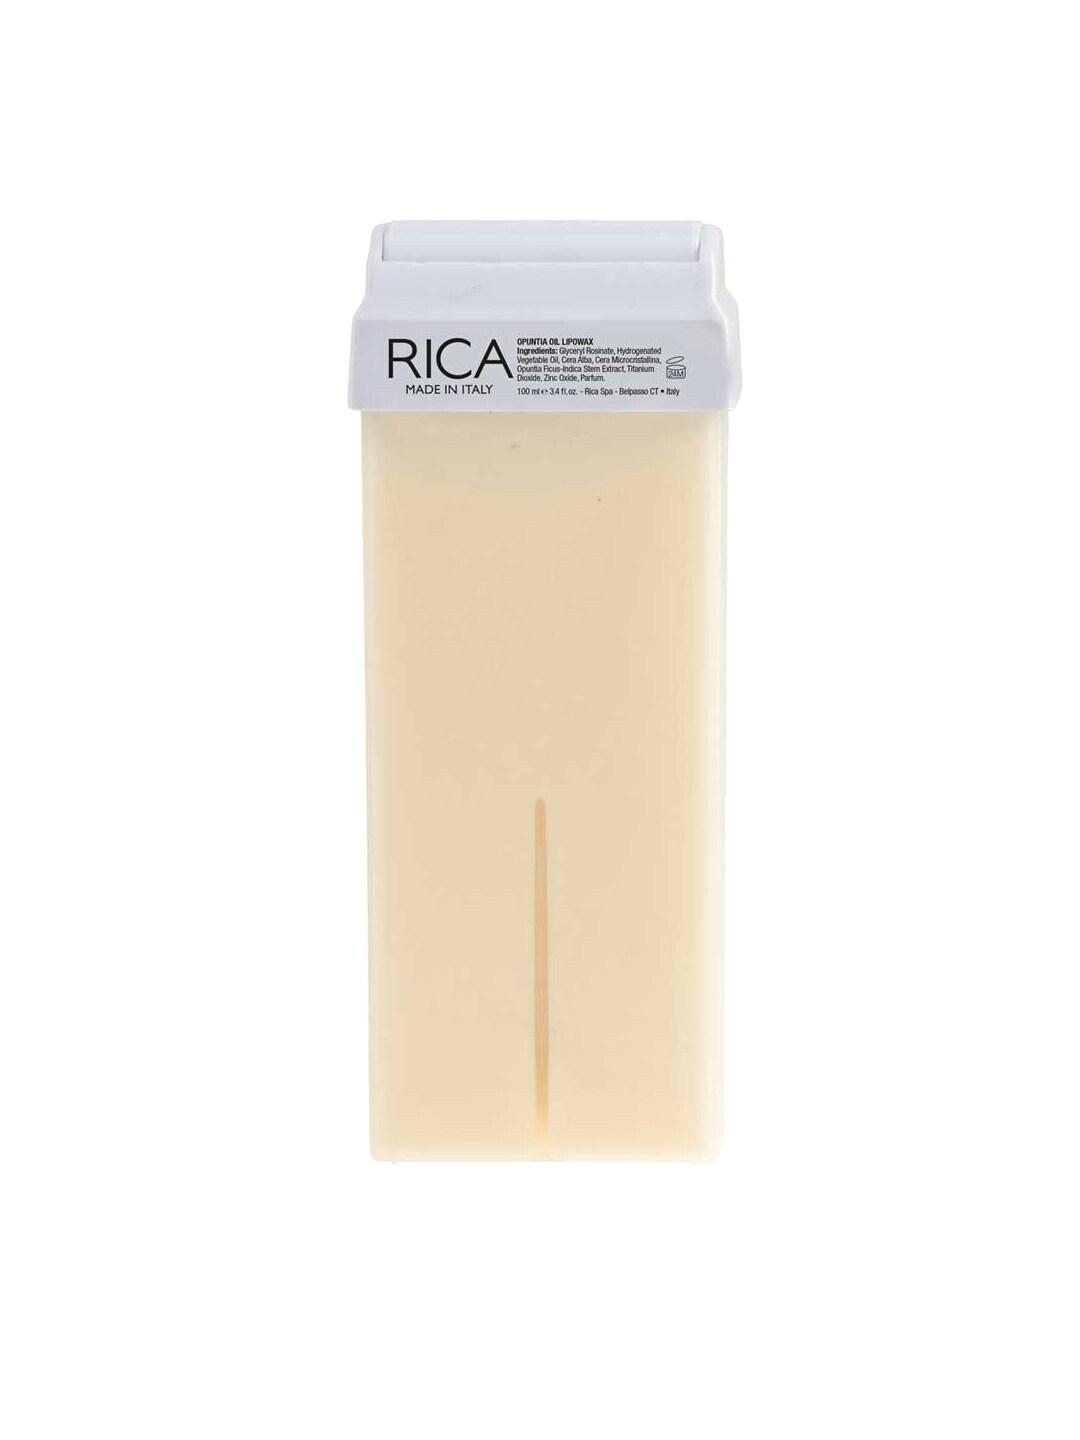 RICA Opuntia Oil Roll On Lipowax - 100 ml